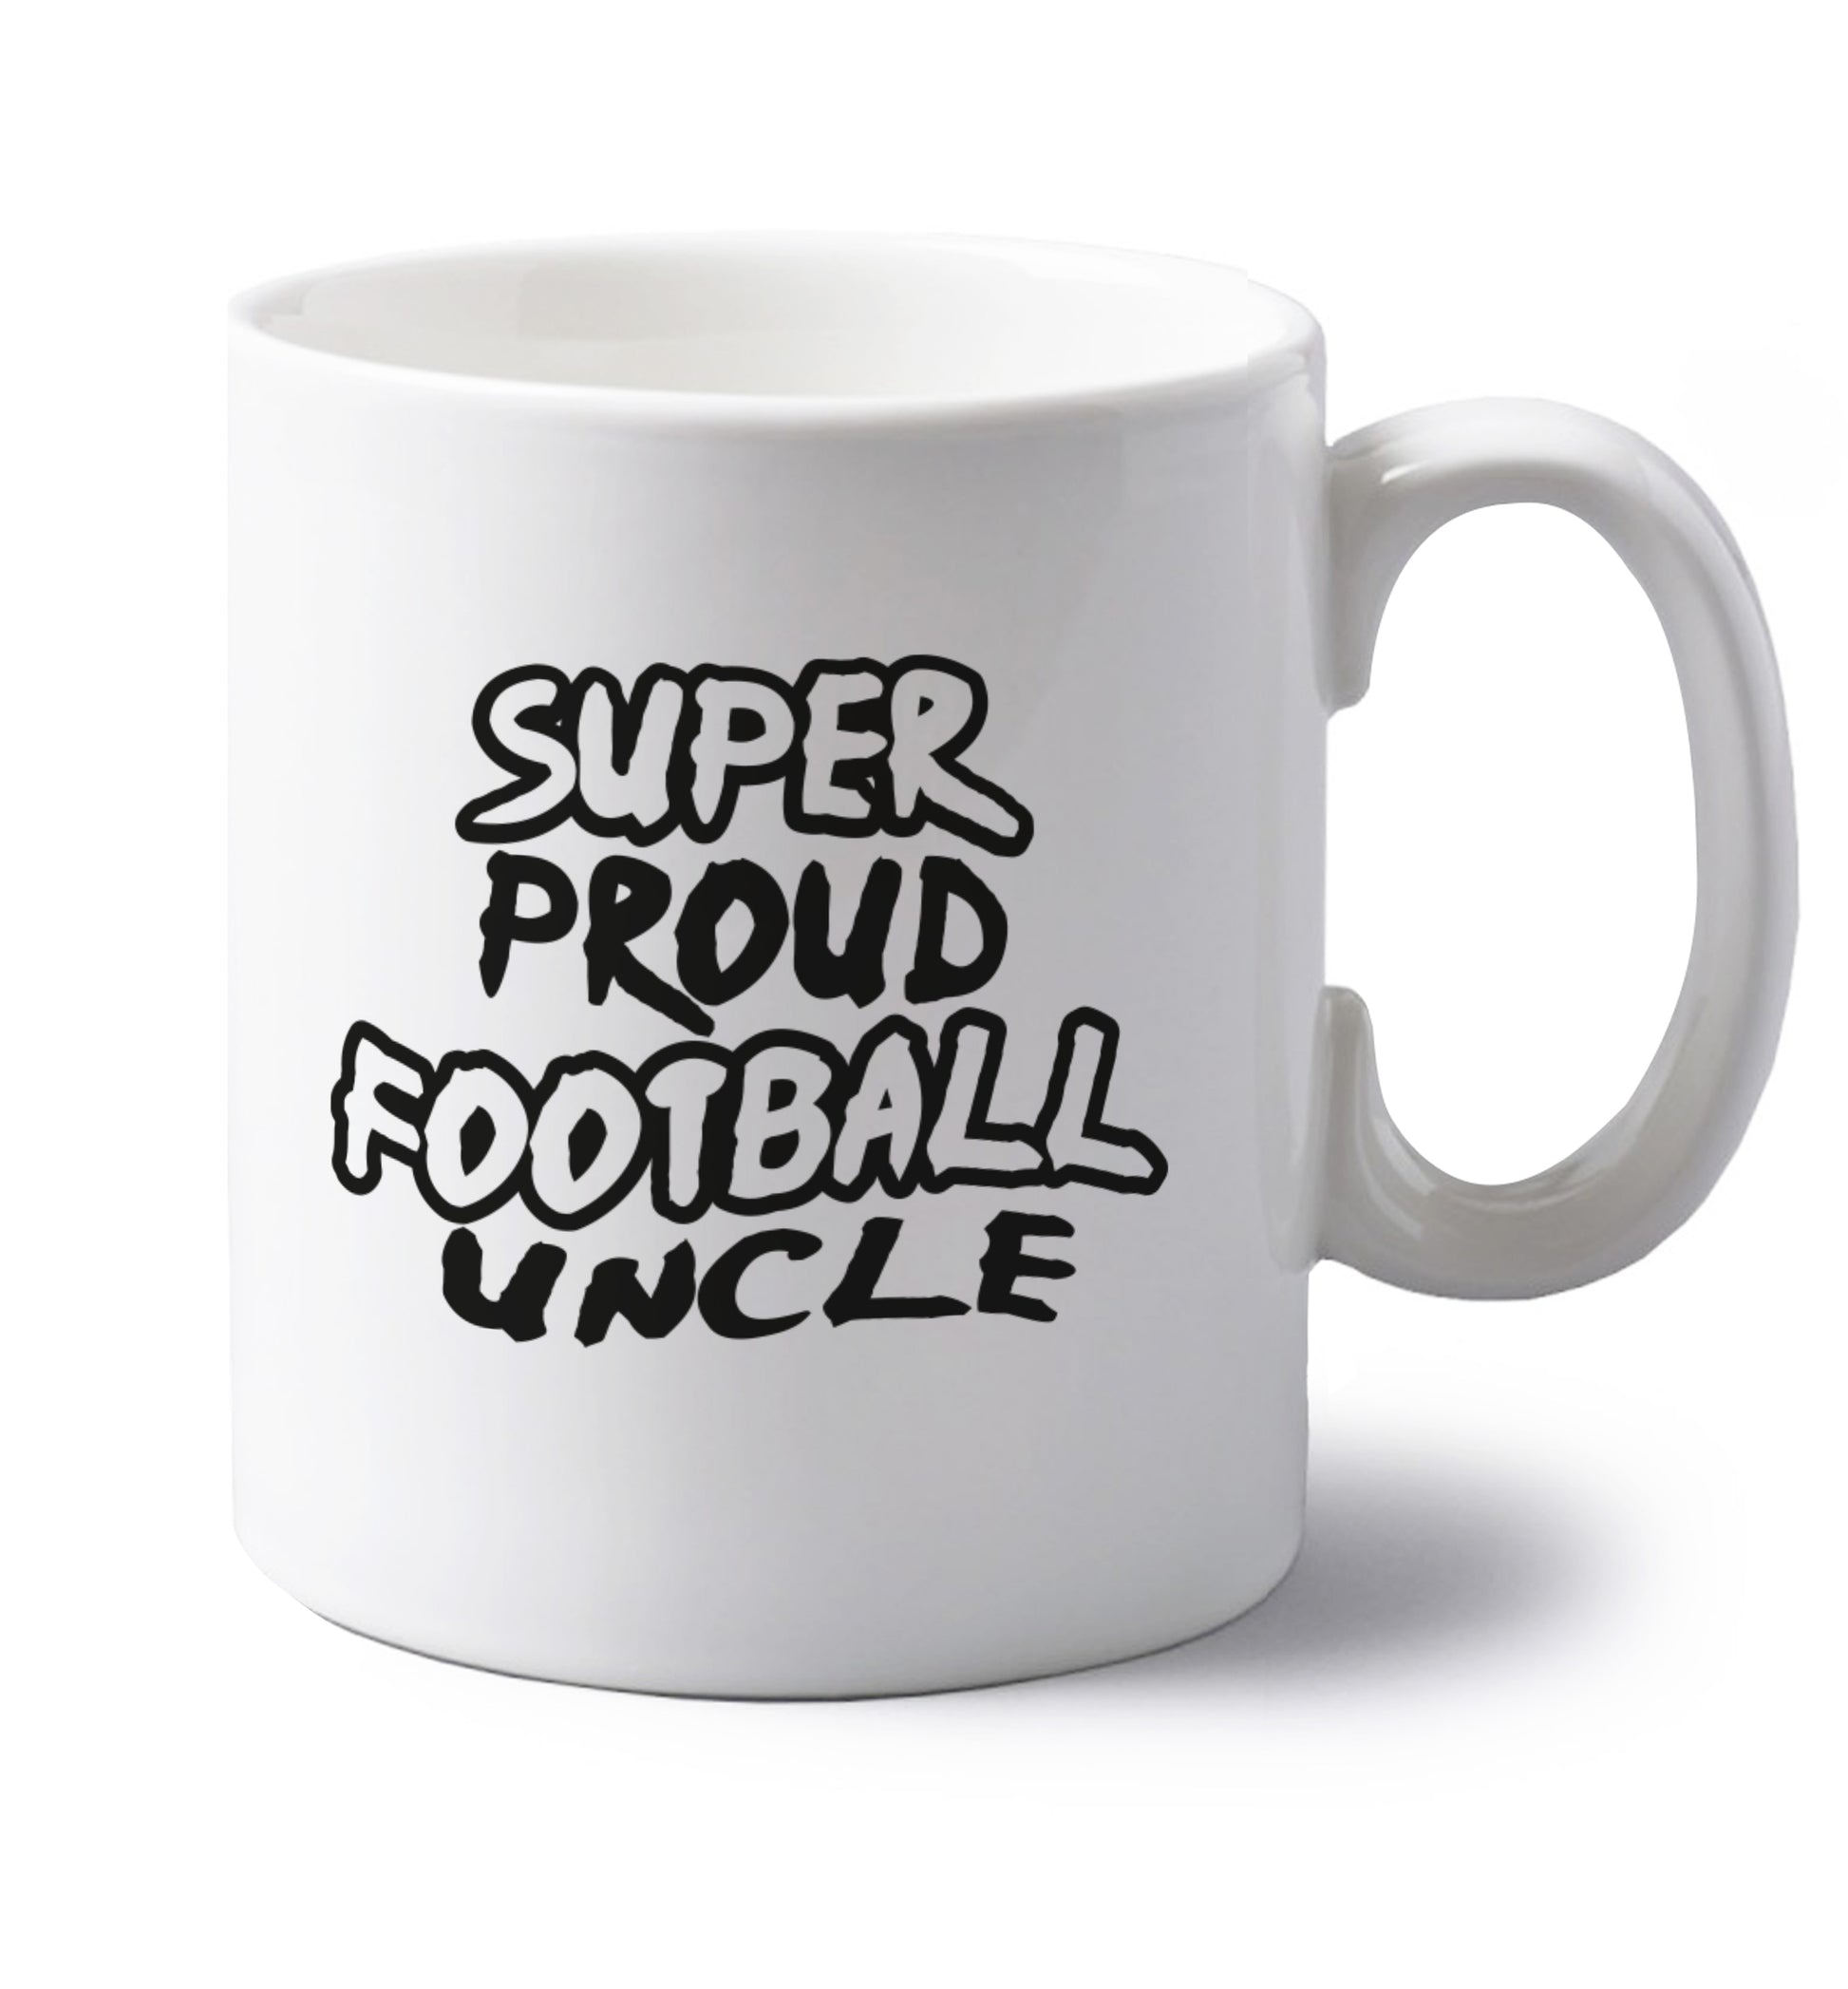 Super proud football uncle left handed white ceramic mug 